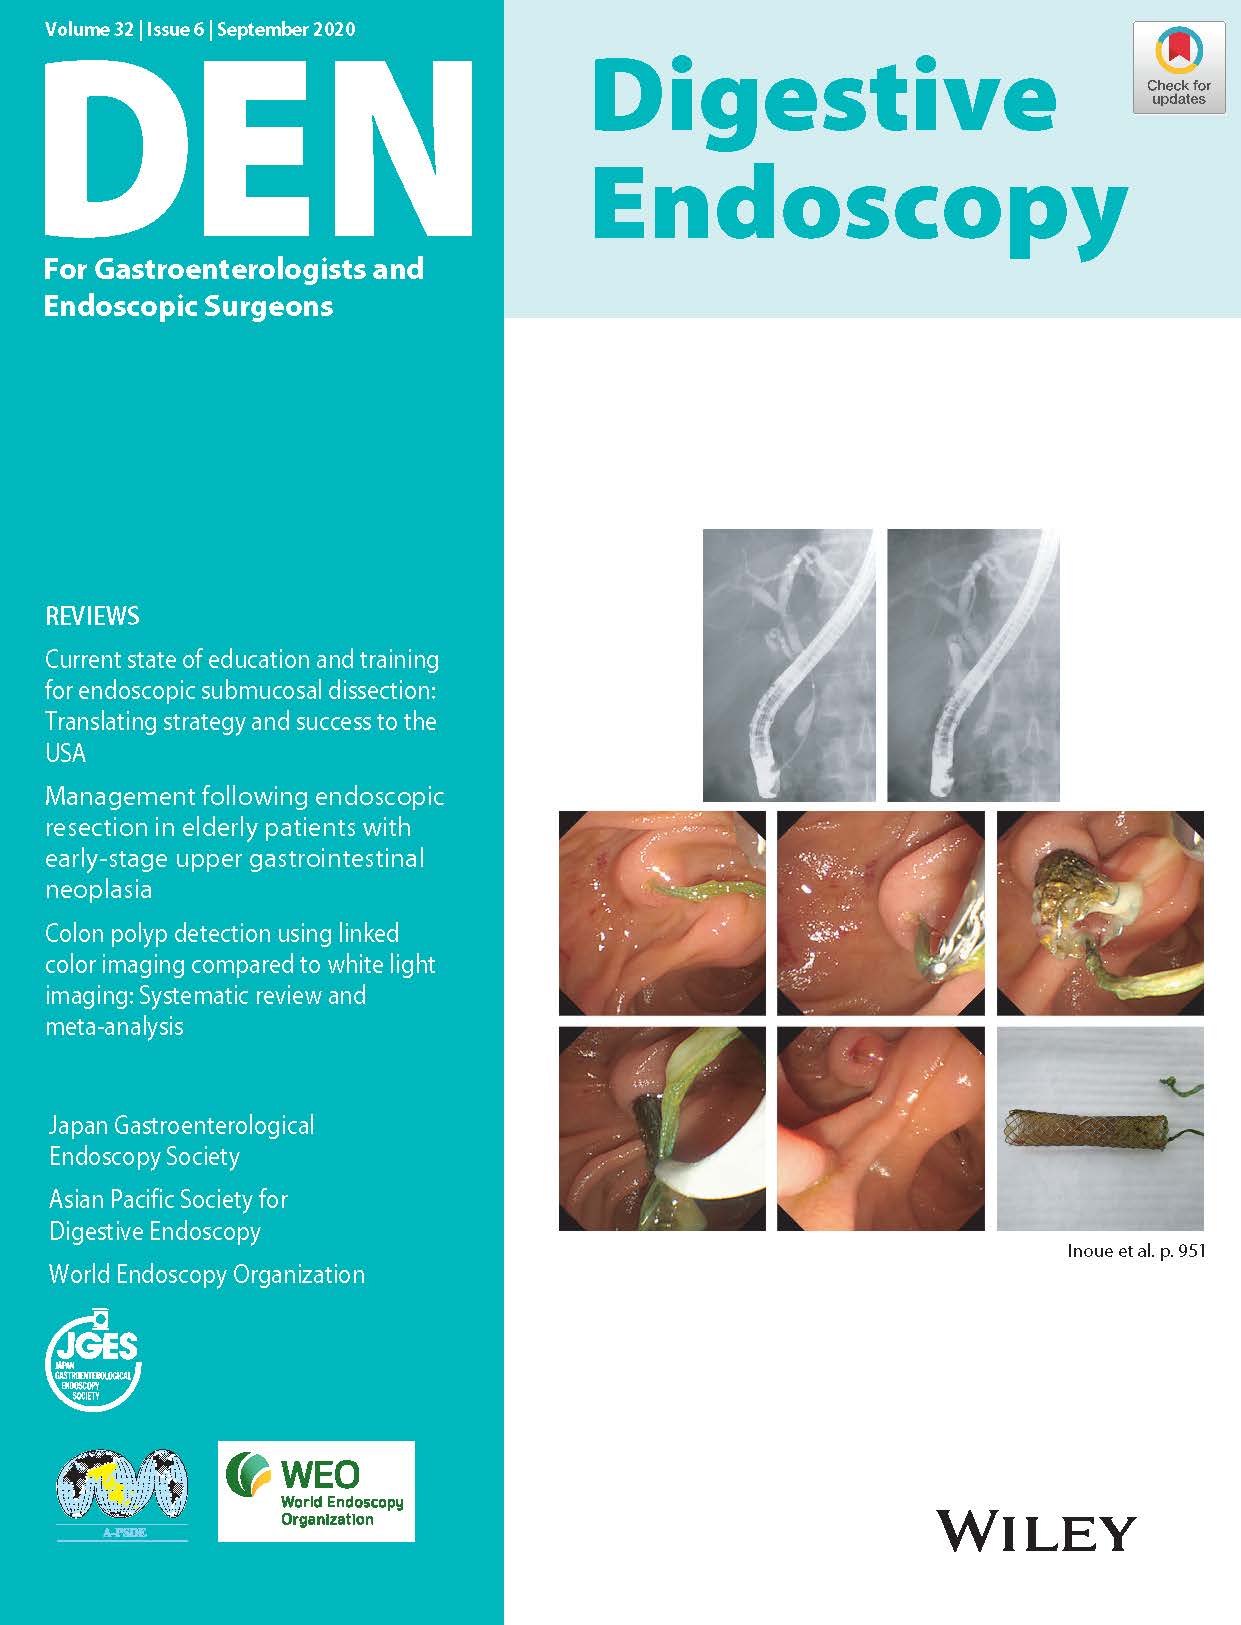 Digestive Endoscopy Vol32-6